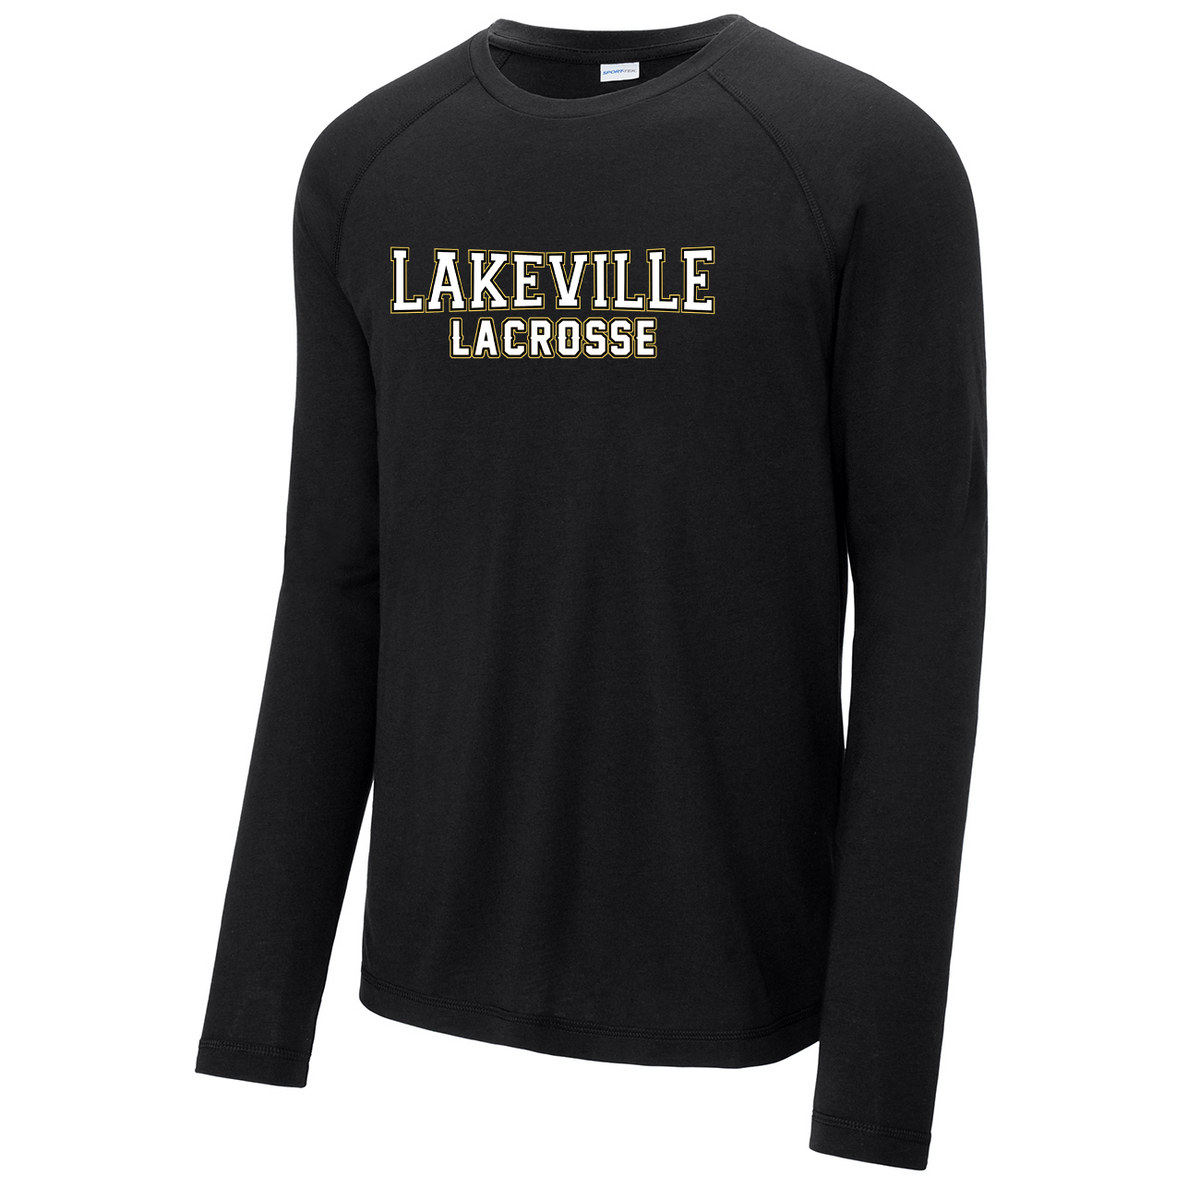 Lakeville Lacrosse Long Sleeve Raglan CottonTouch